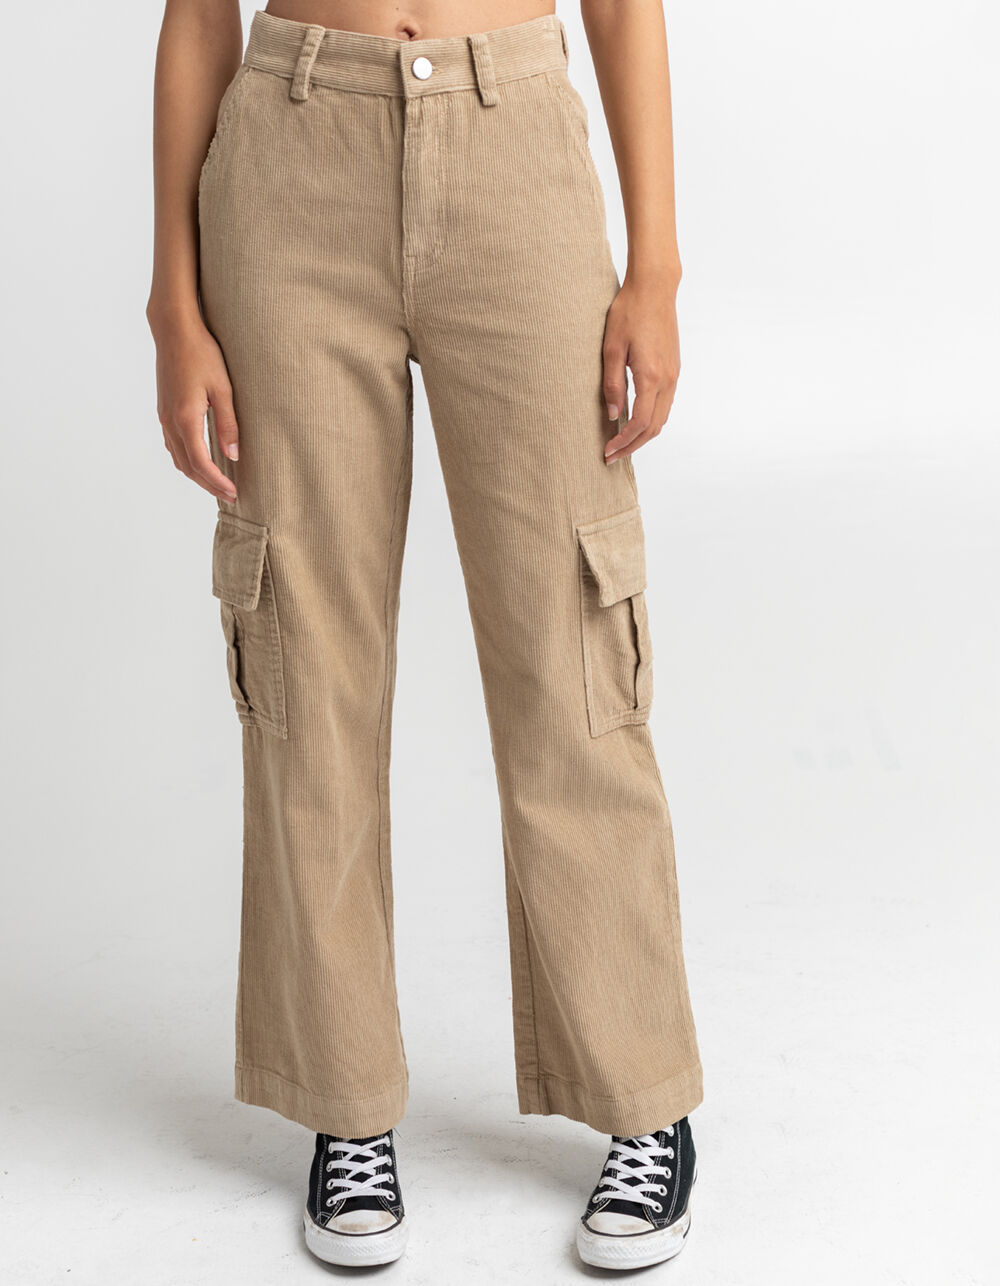 Buy Floerns Womens High Waist Flap Pocket Zipper Corduroy Cargo Pants  Camel XSmall at Amazonin